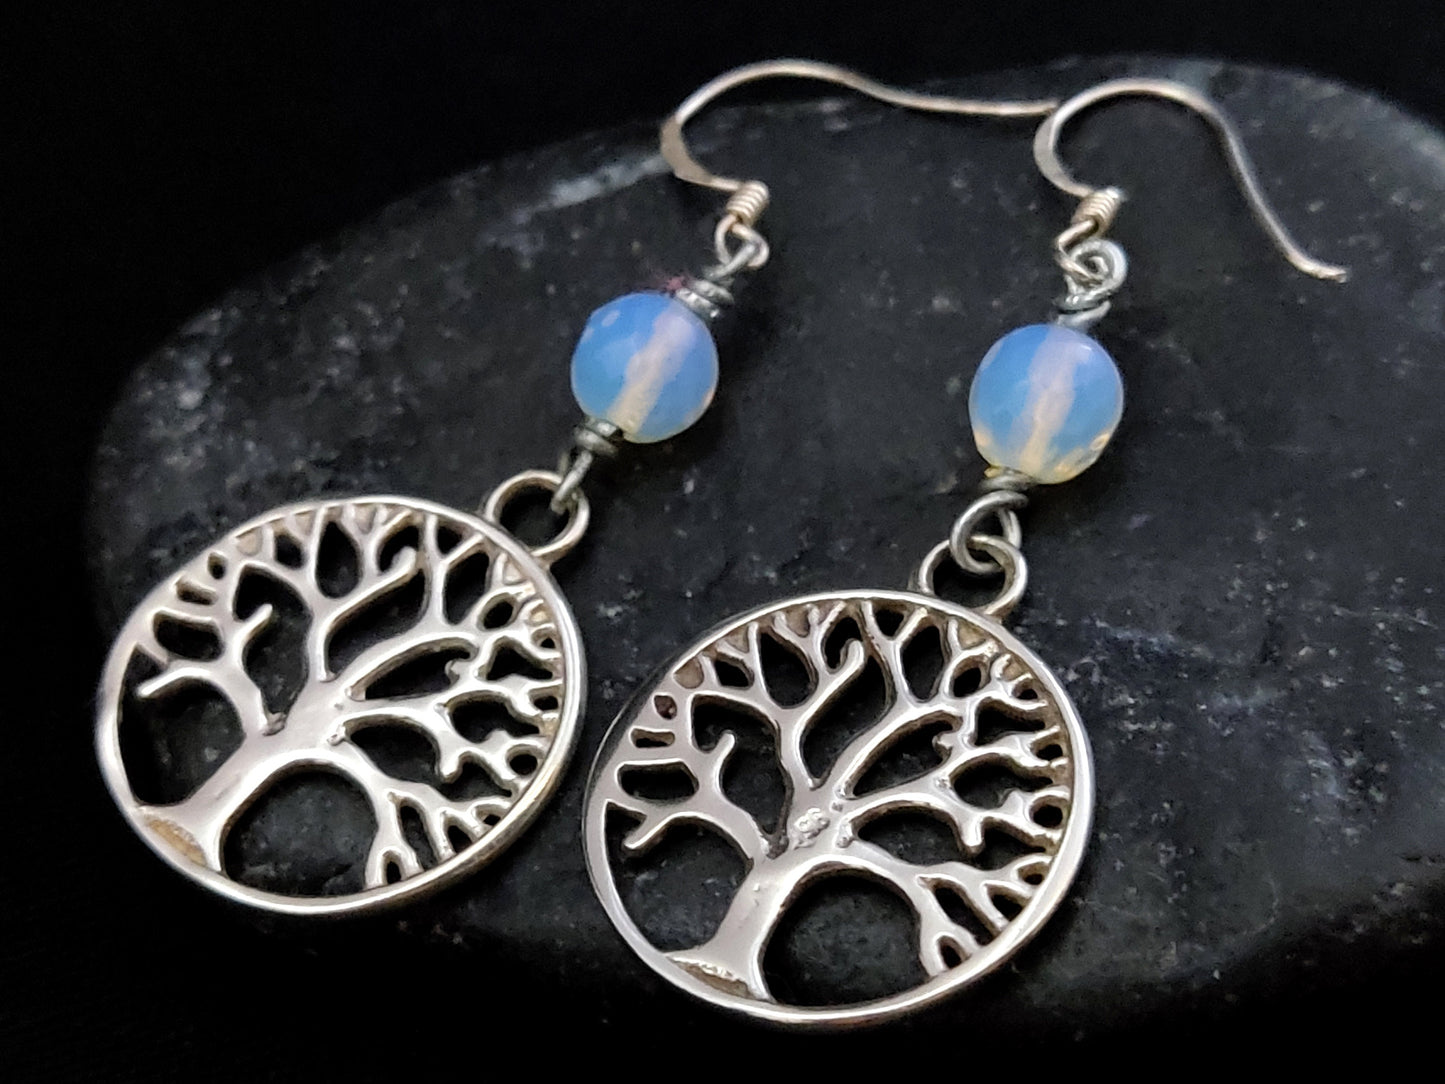 Tree Of Life & Moonstone Silver Earrings, Greek Handmade Jewelry, Lebens Baum Silber Ohrringe, Moonstone Dangle Long Earrings From Greece